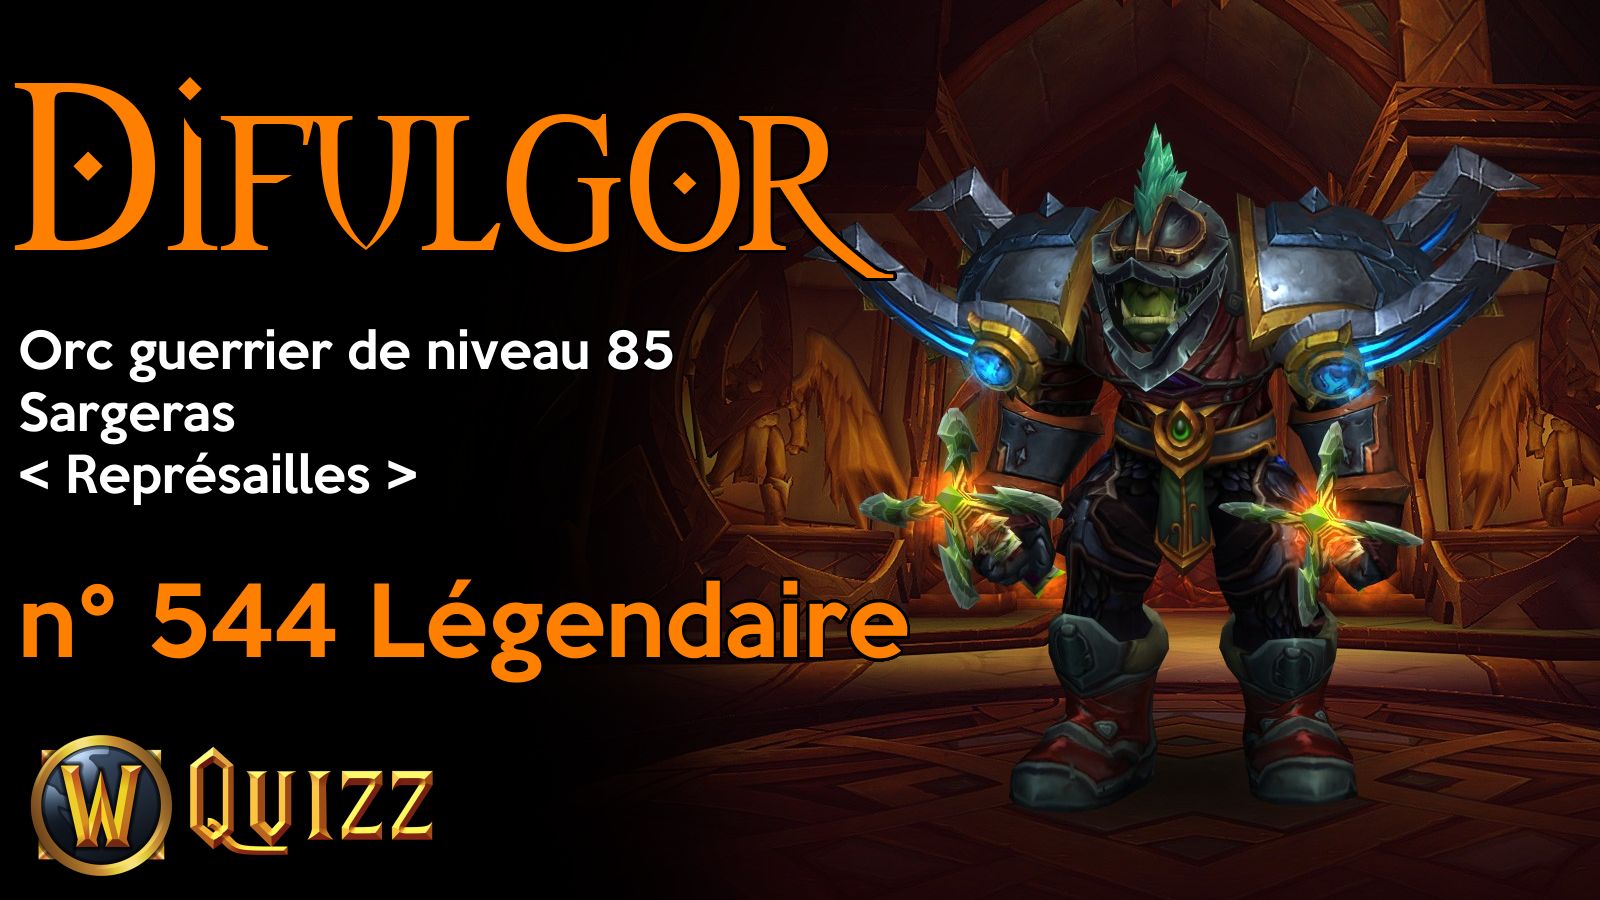 Difulgor, Orc guerrier de niveau 85, Sargeras